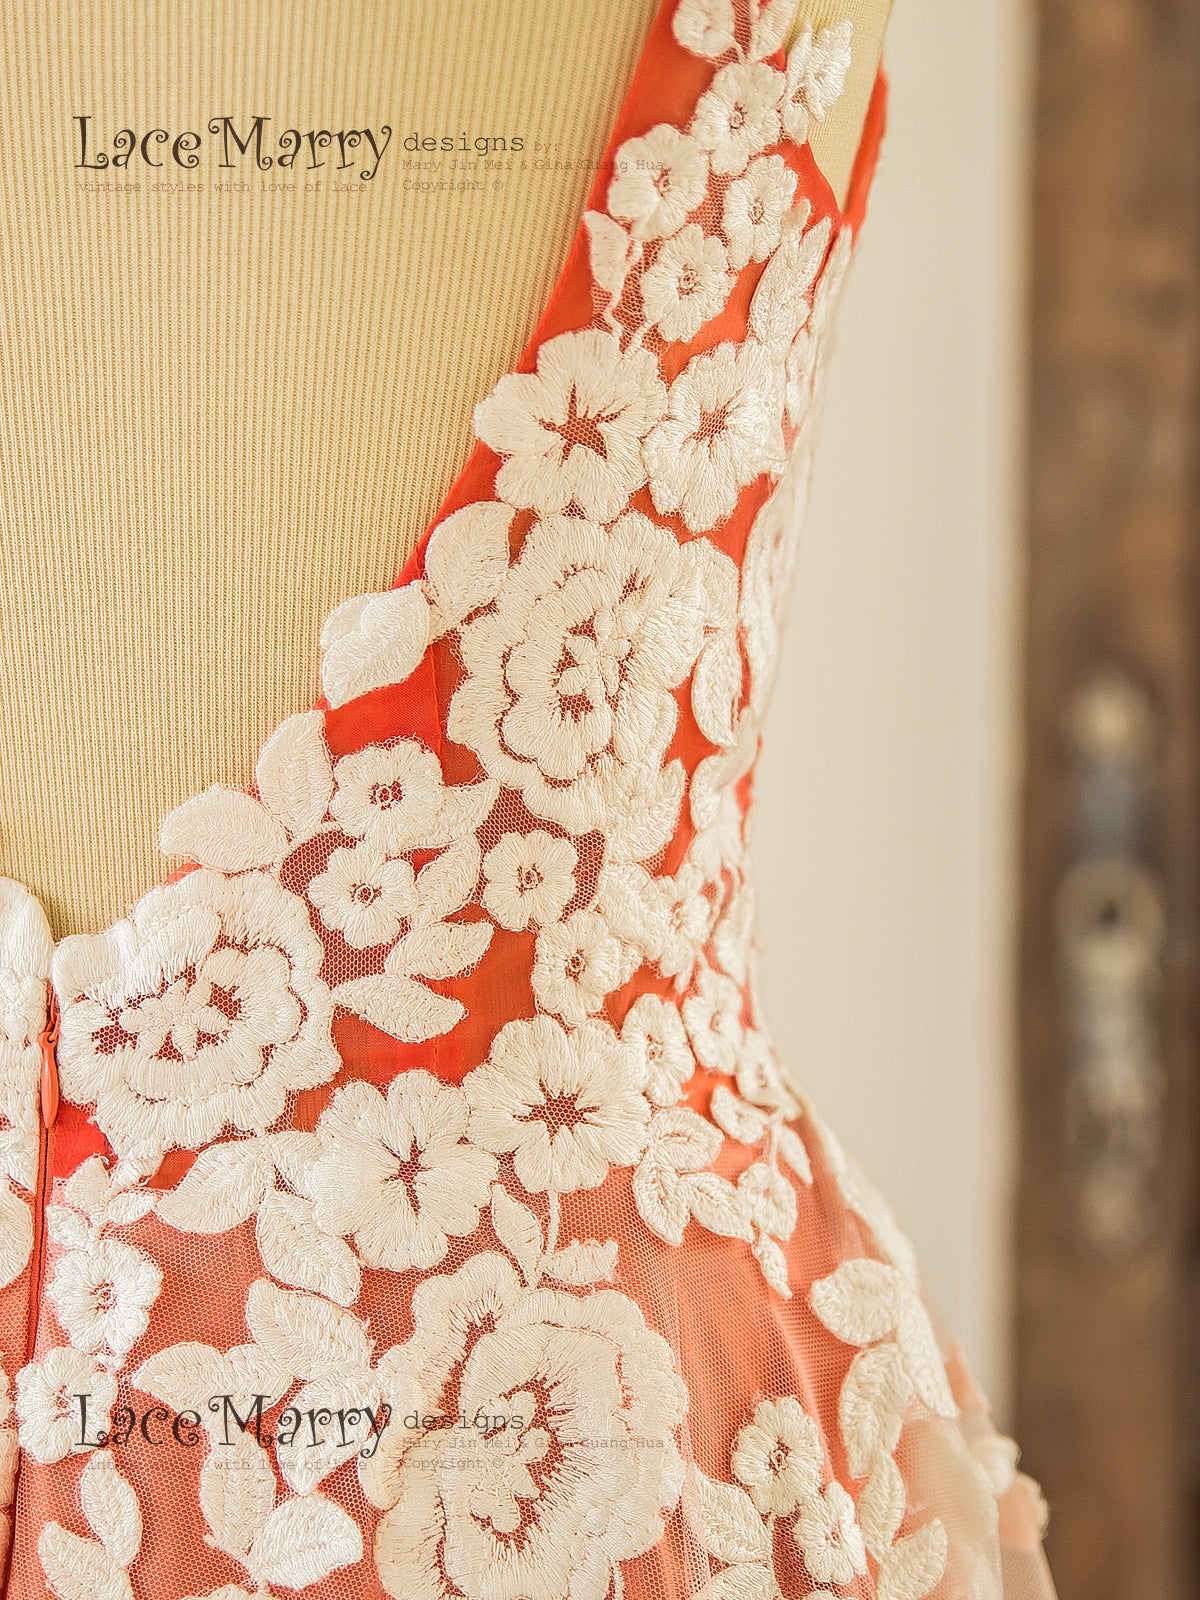 Ivory Flower Appliques on Coral Color Underlay Wedding Dress